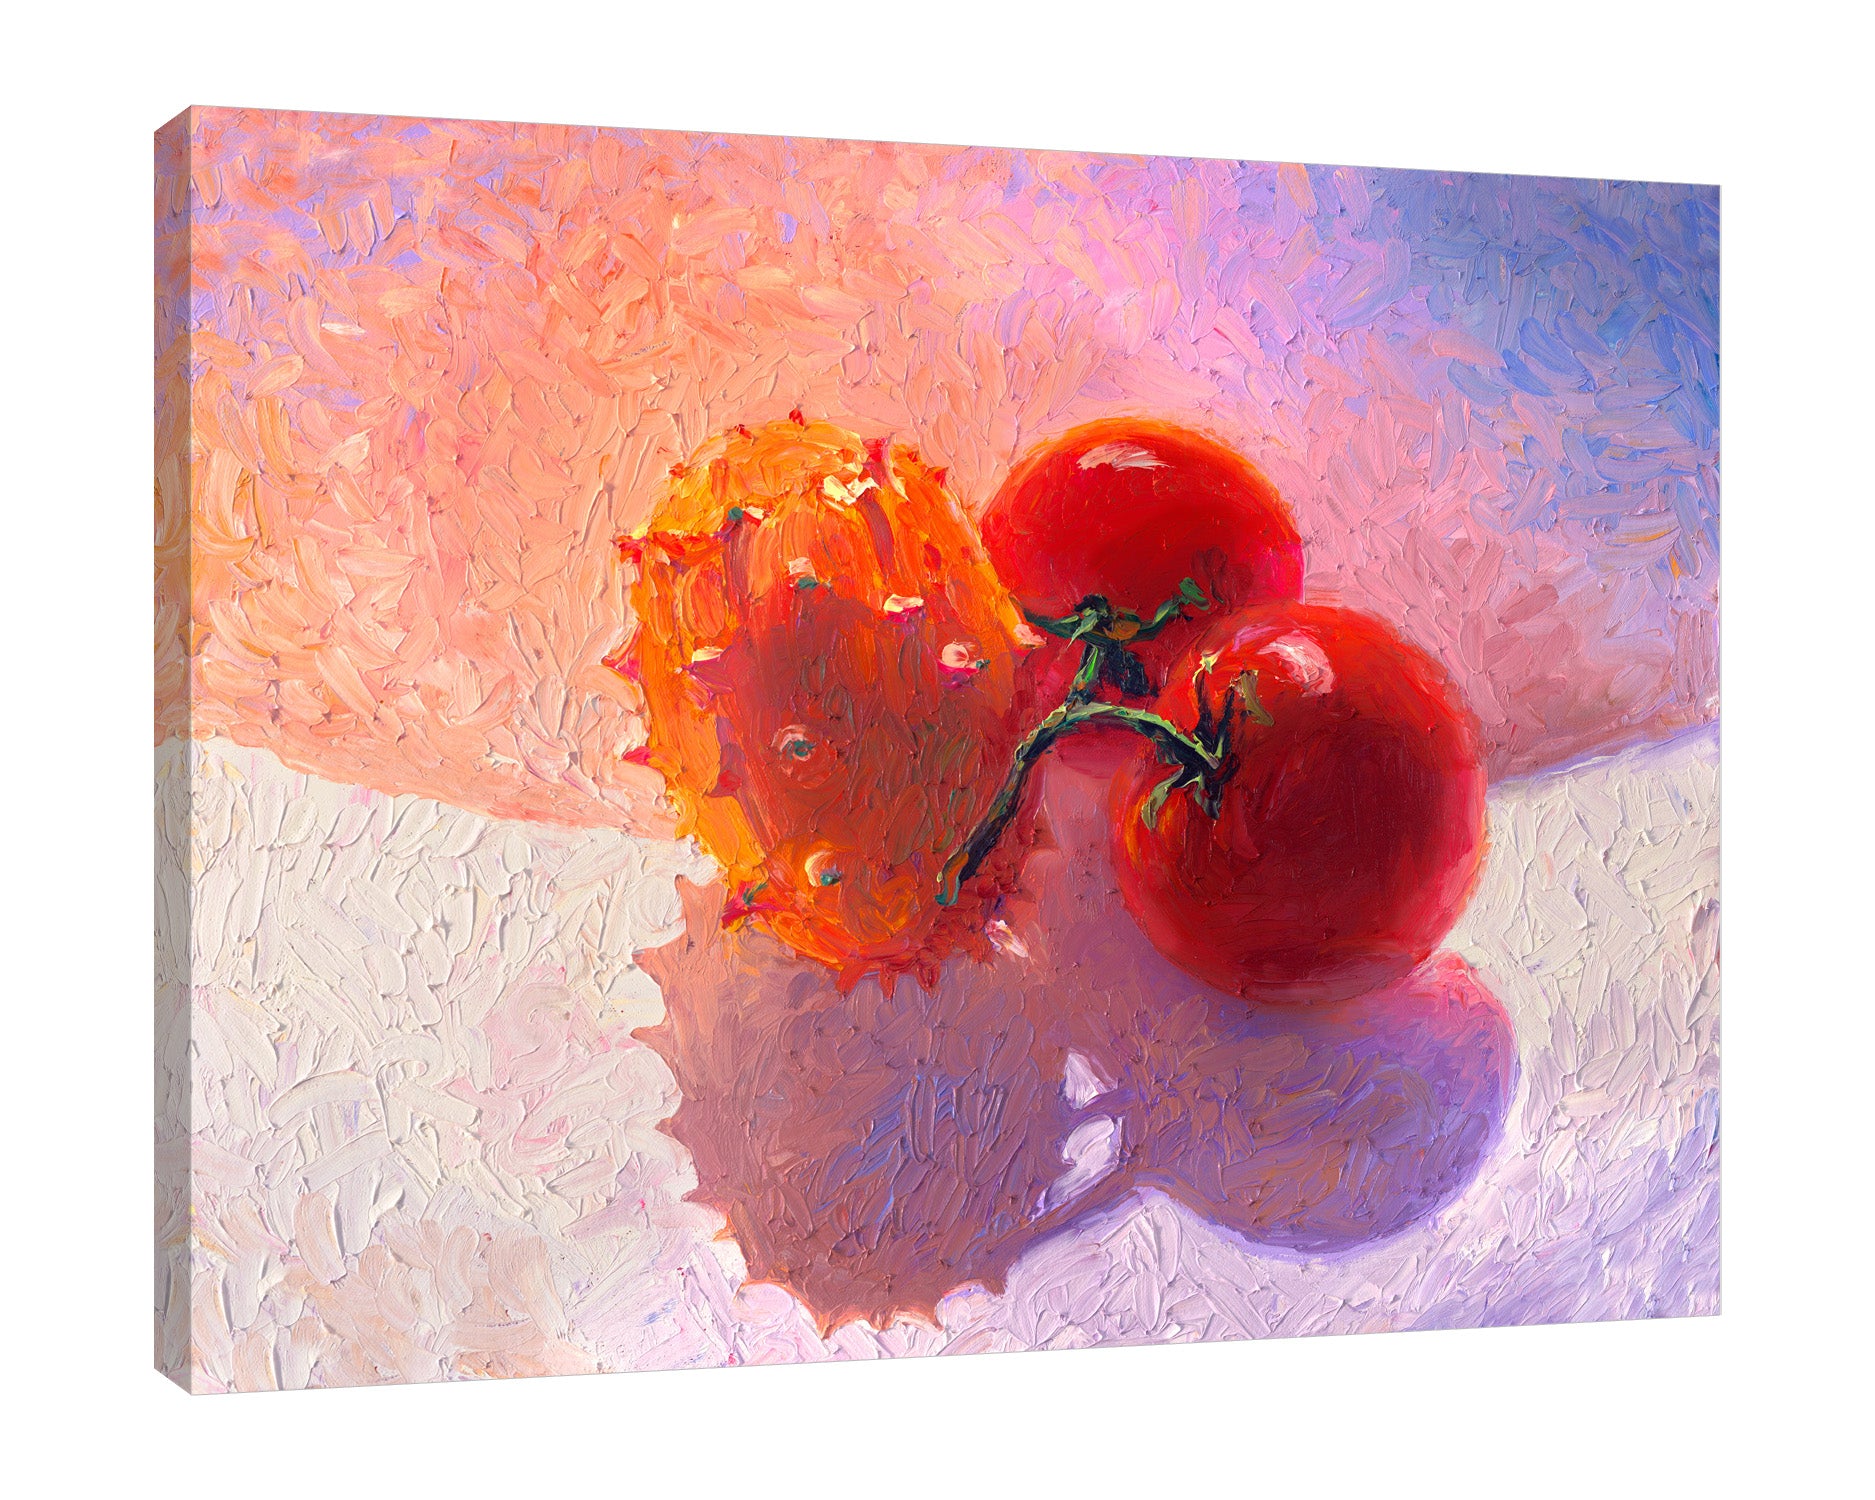 Iris-Scott,Modern & Contemporary,Food & Beverage,Impressionism,surreal,finger paint,cherries,fruit,bowl,